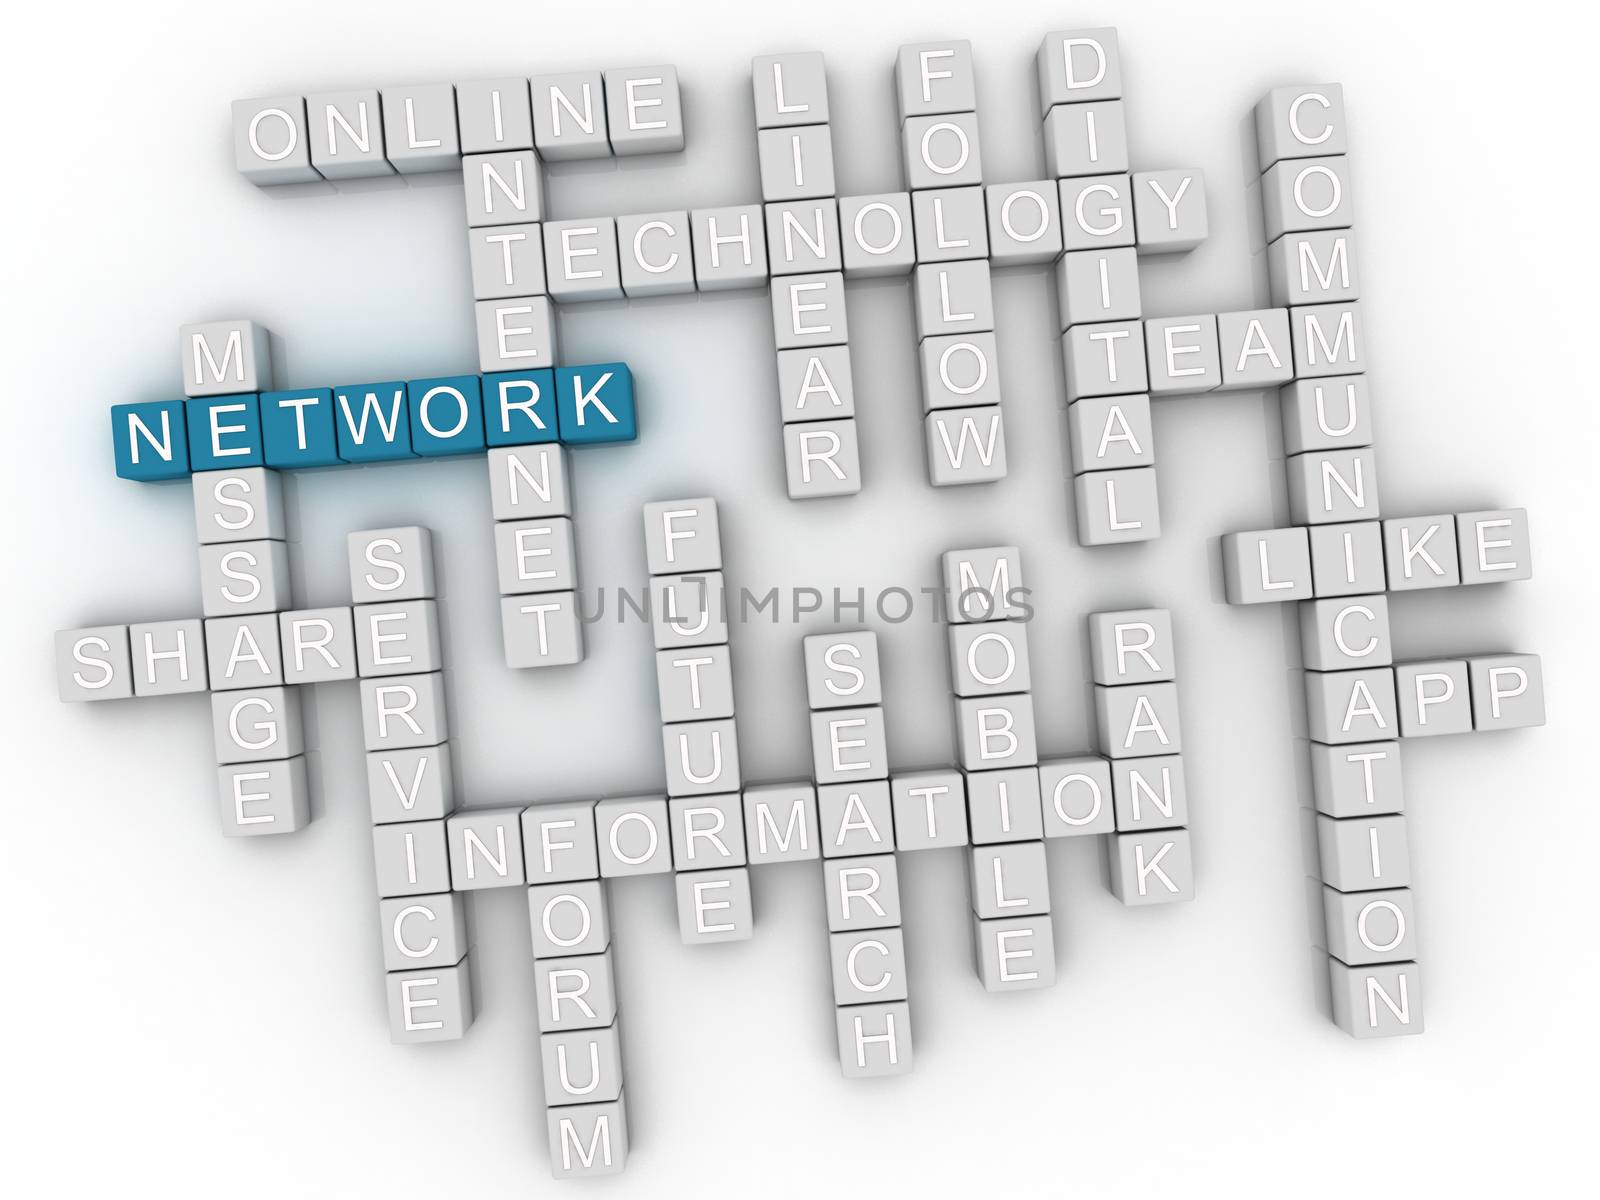 3d Network Concept word cloud